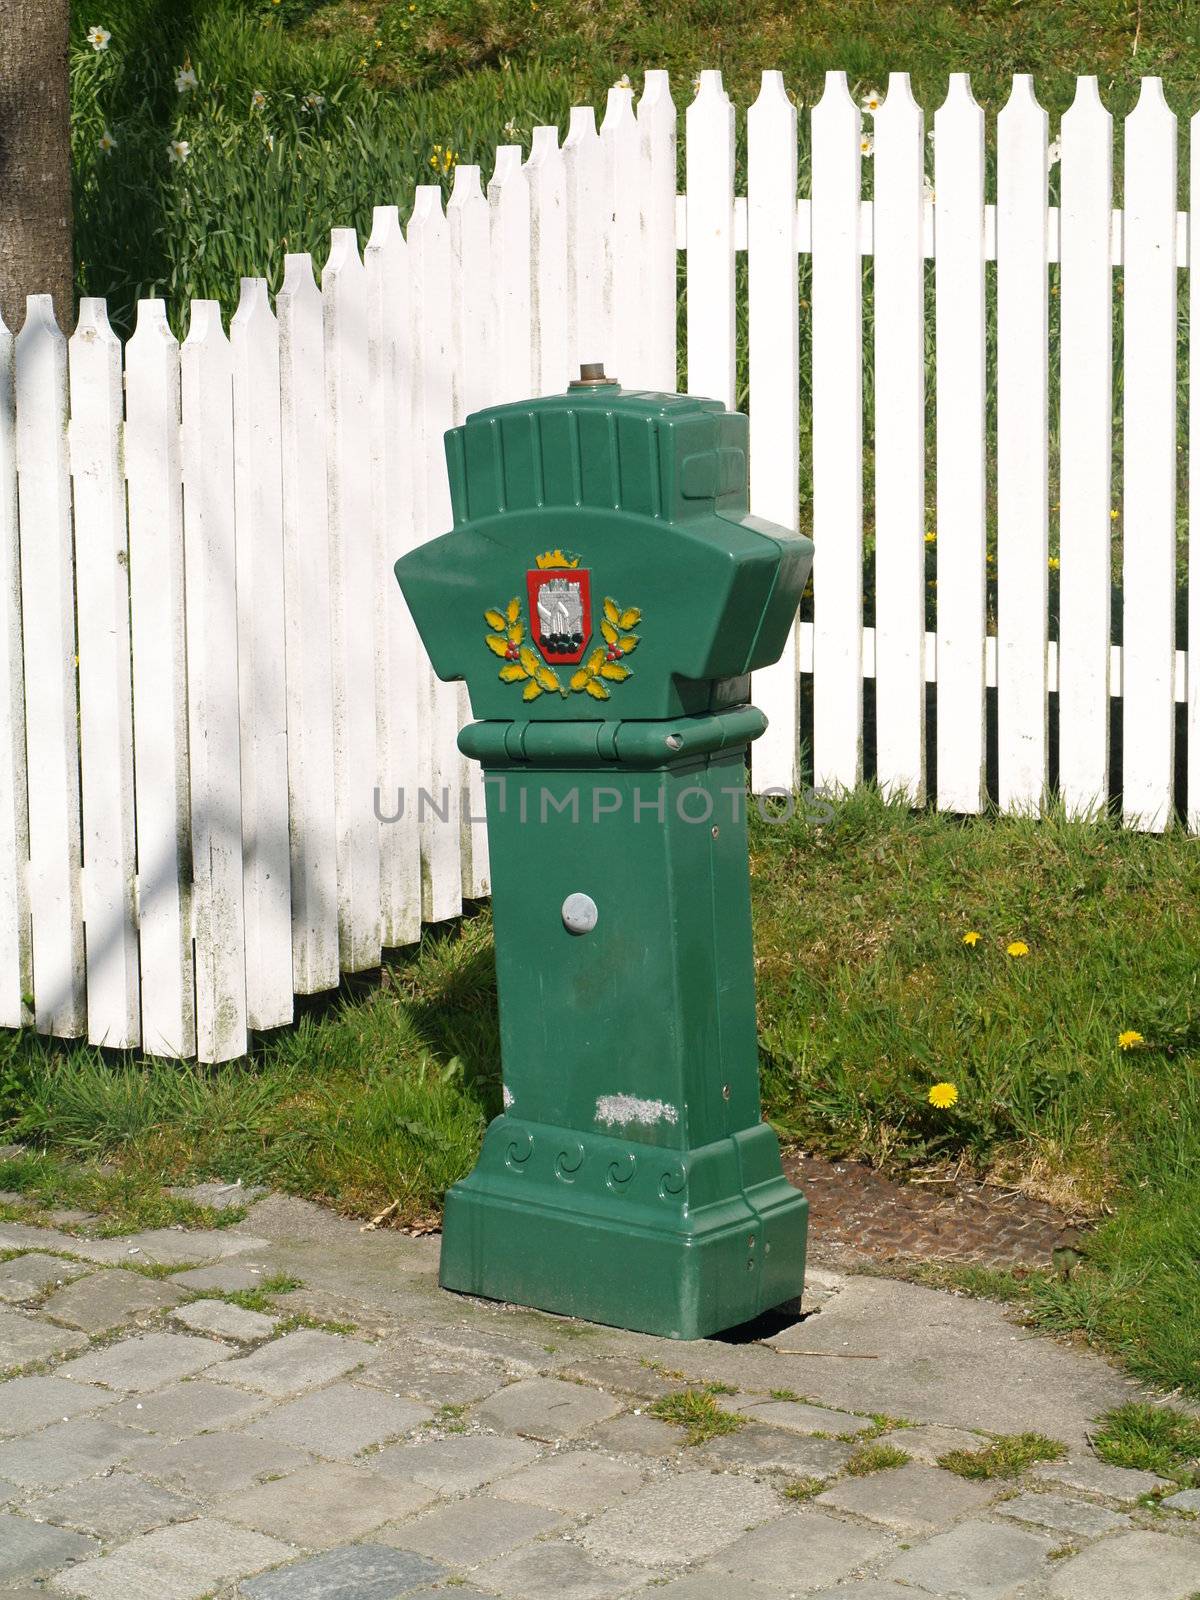 water hydrant by viviolsen